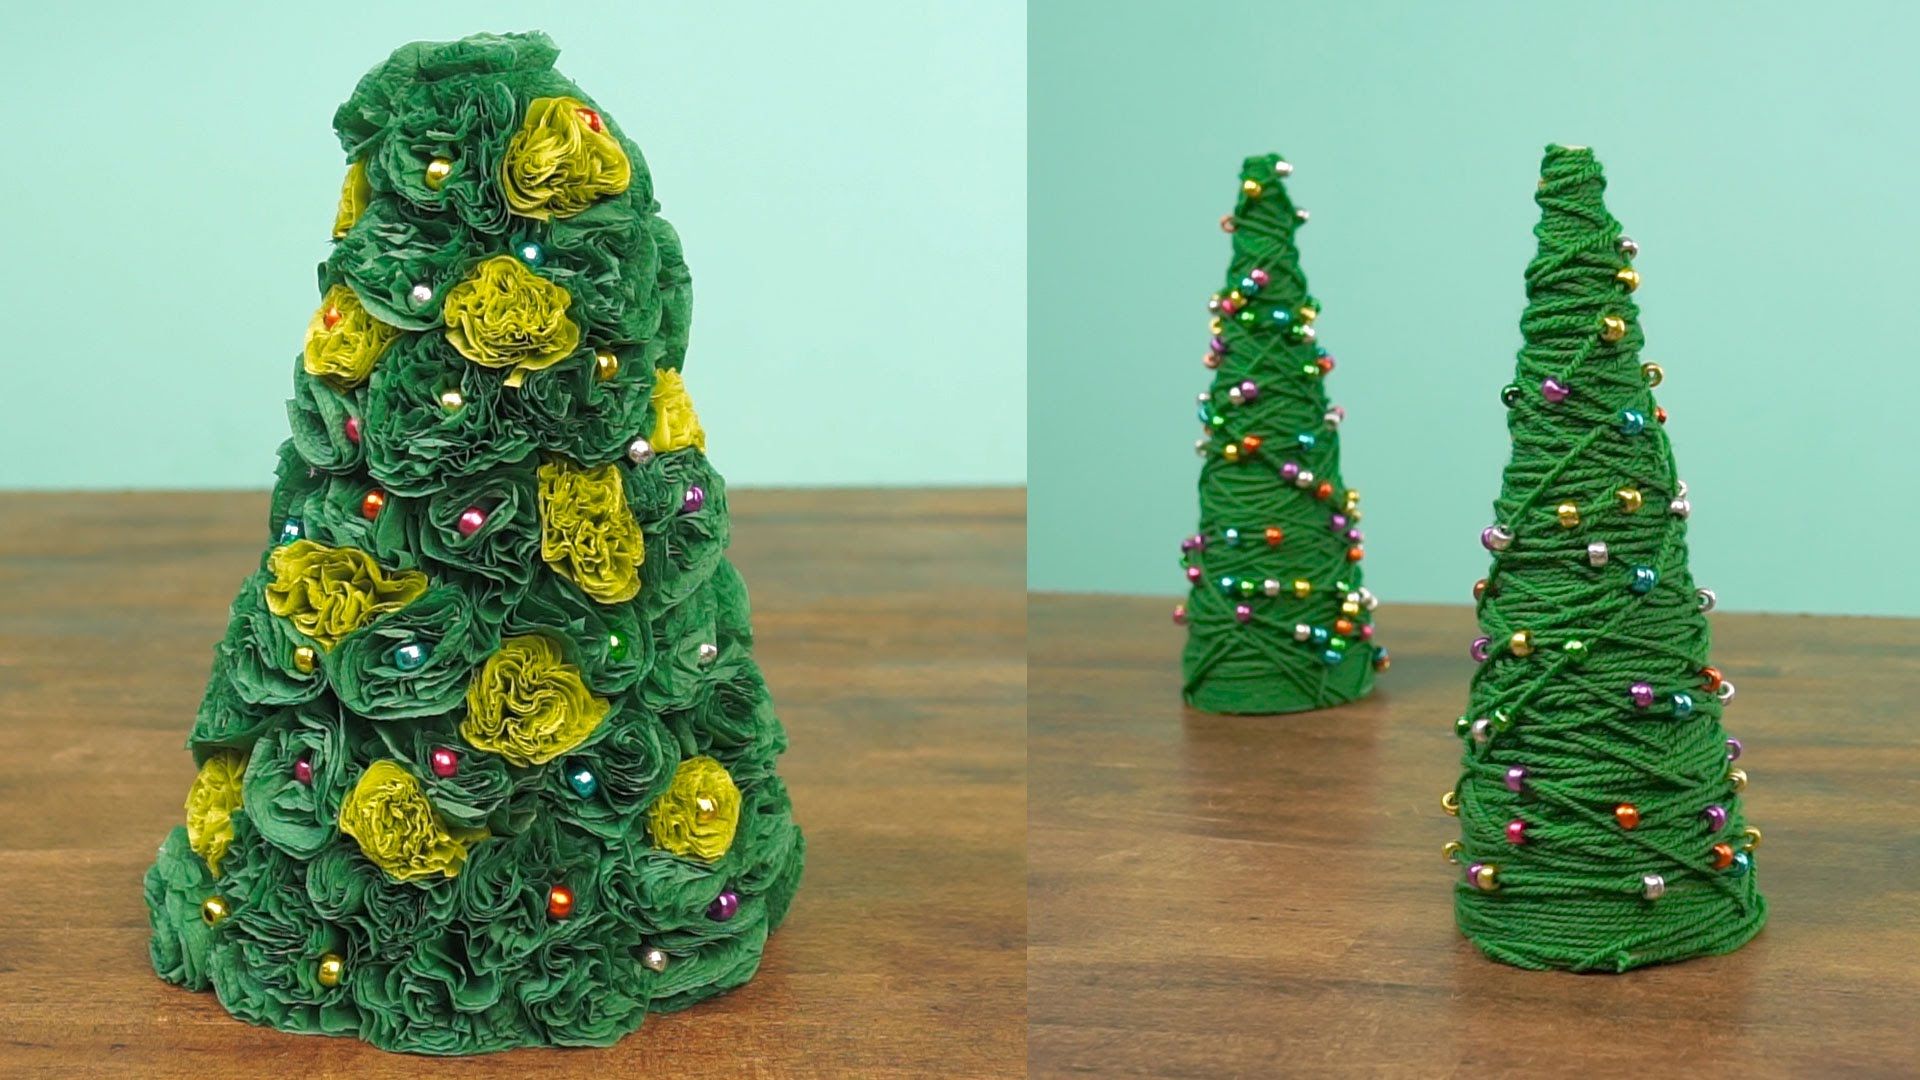 2 Miniature Christmas Tree Caft DIY Projects -   Best DIY Christmas Tree Ideas